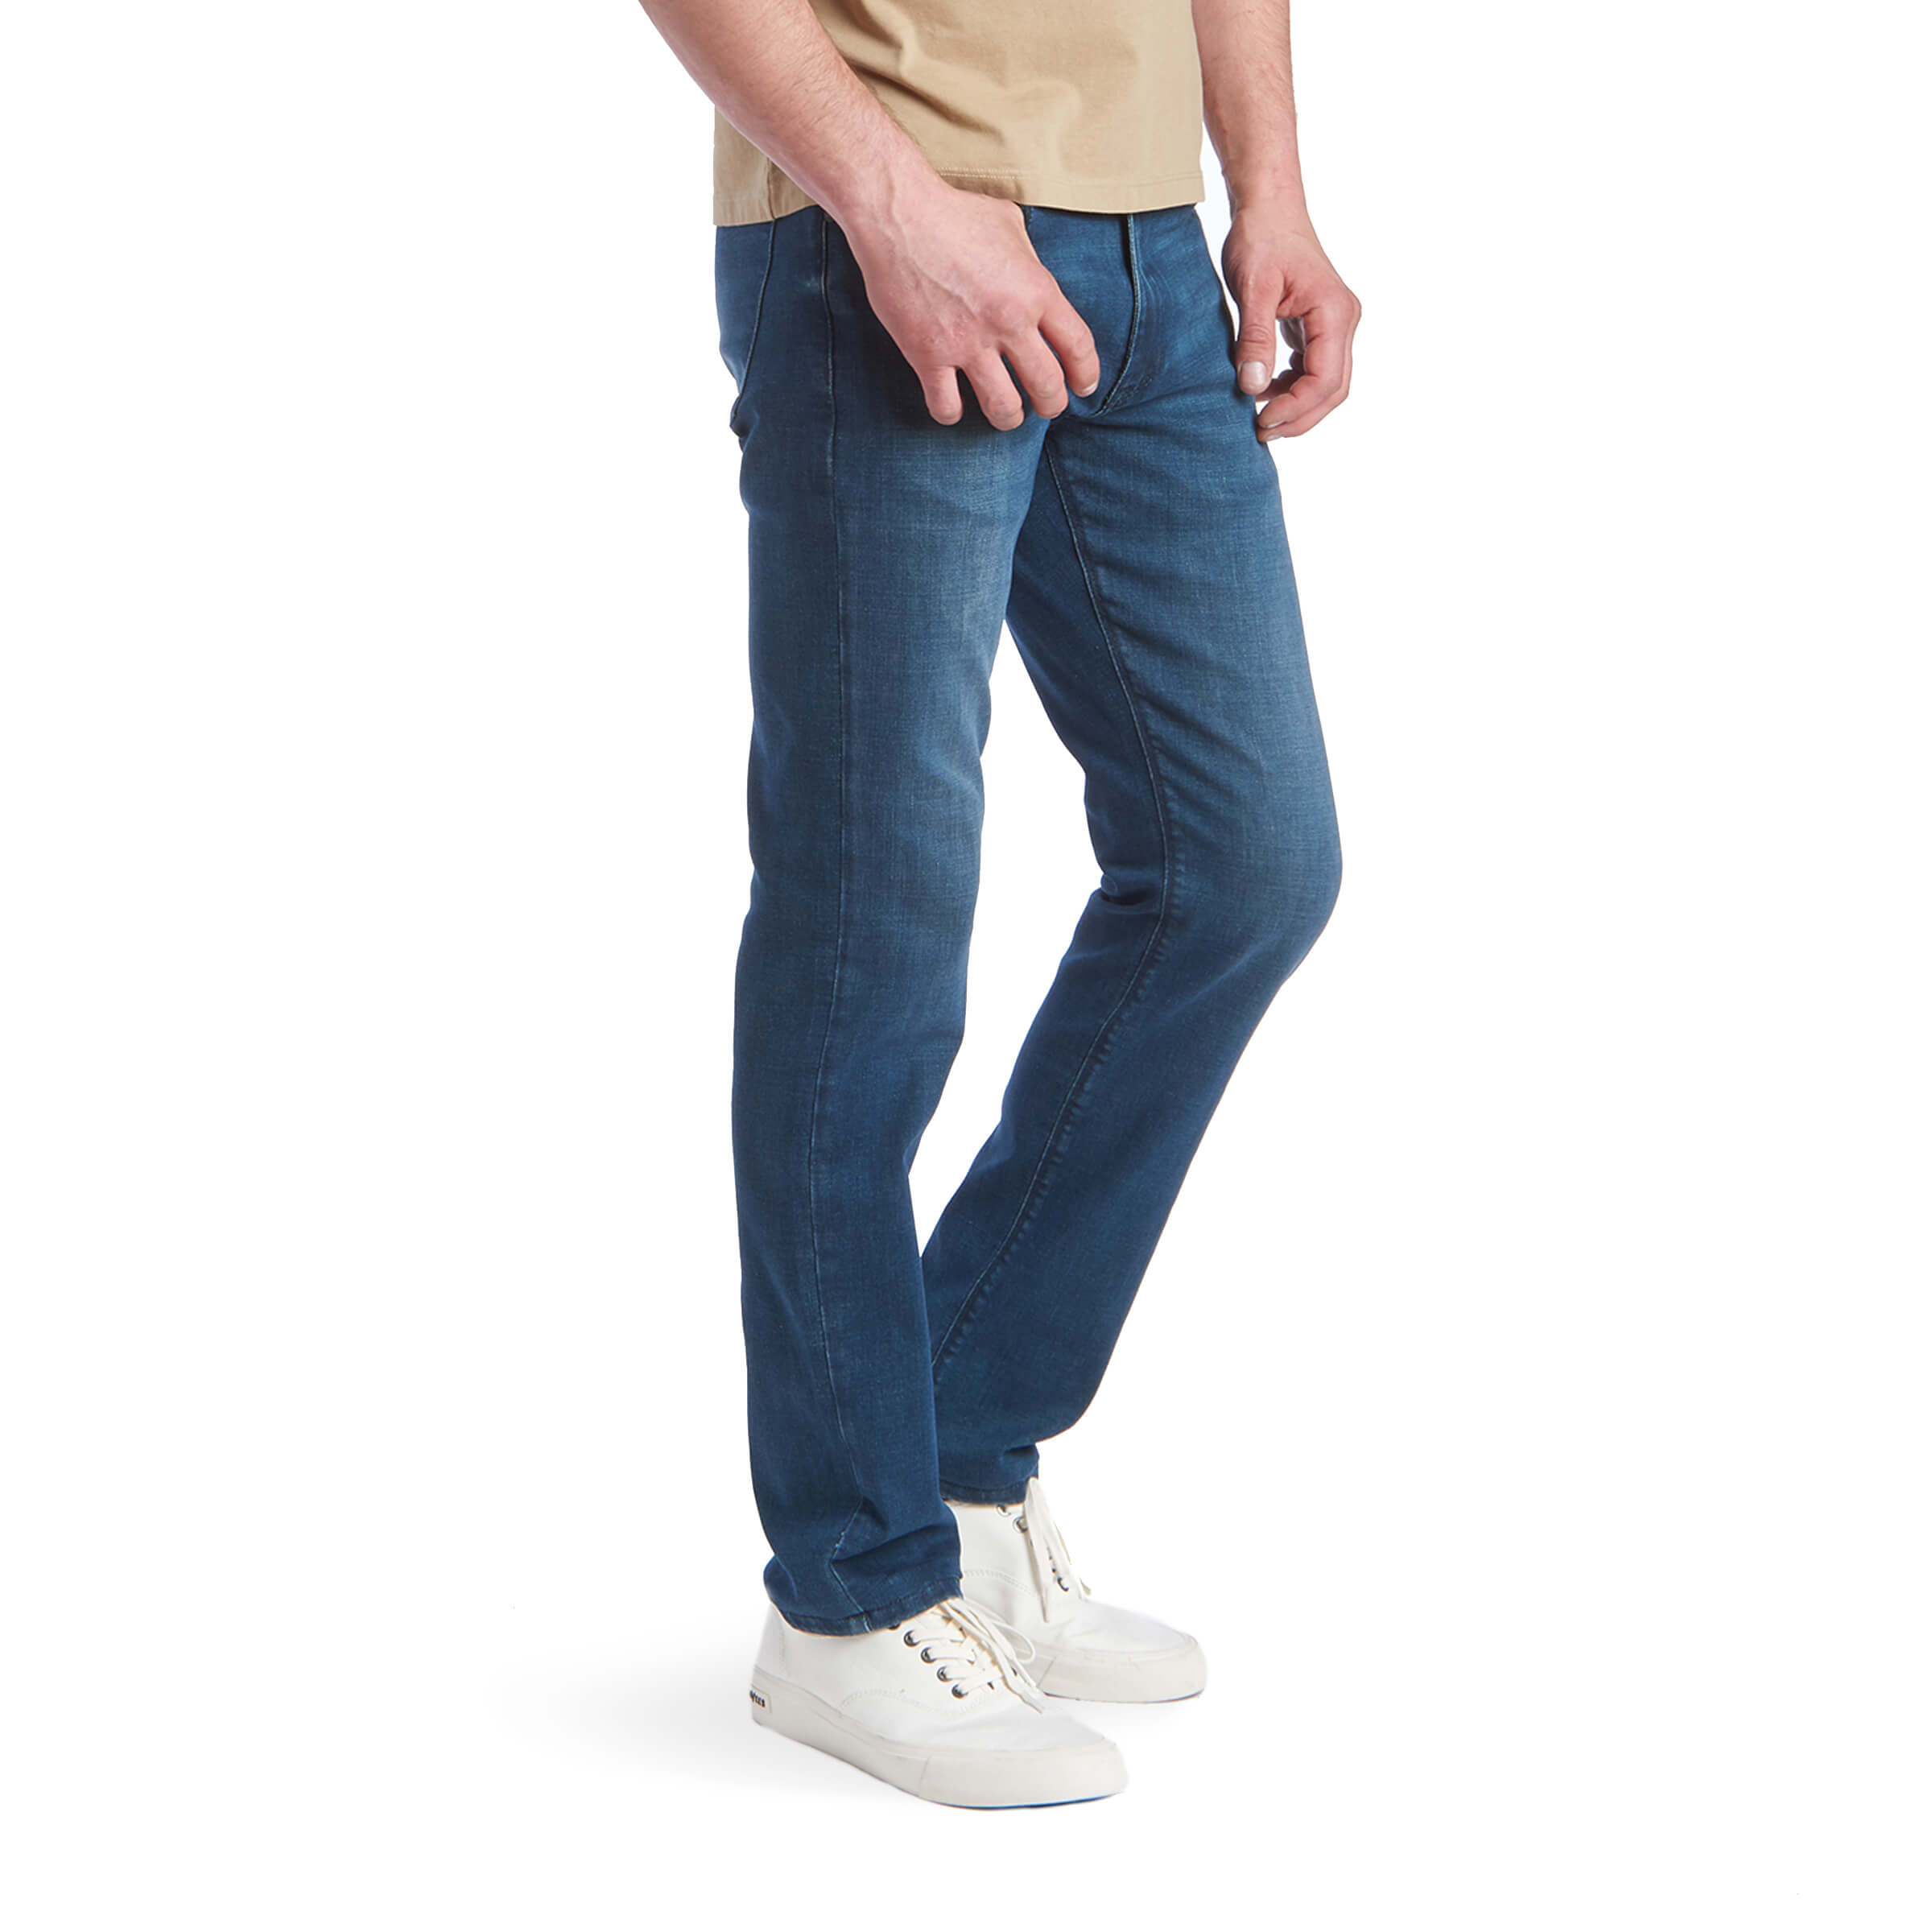 Men wearing Medium/Dark Blue Slim Fulton Jeans